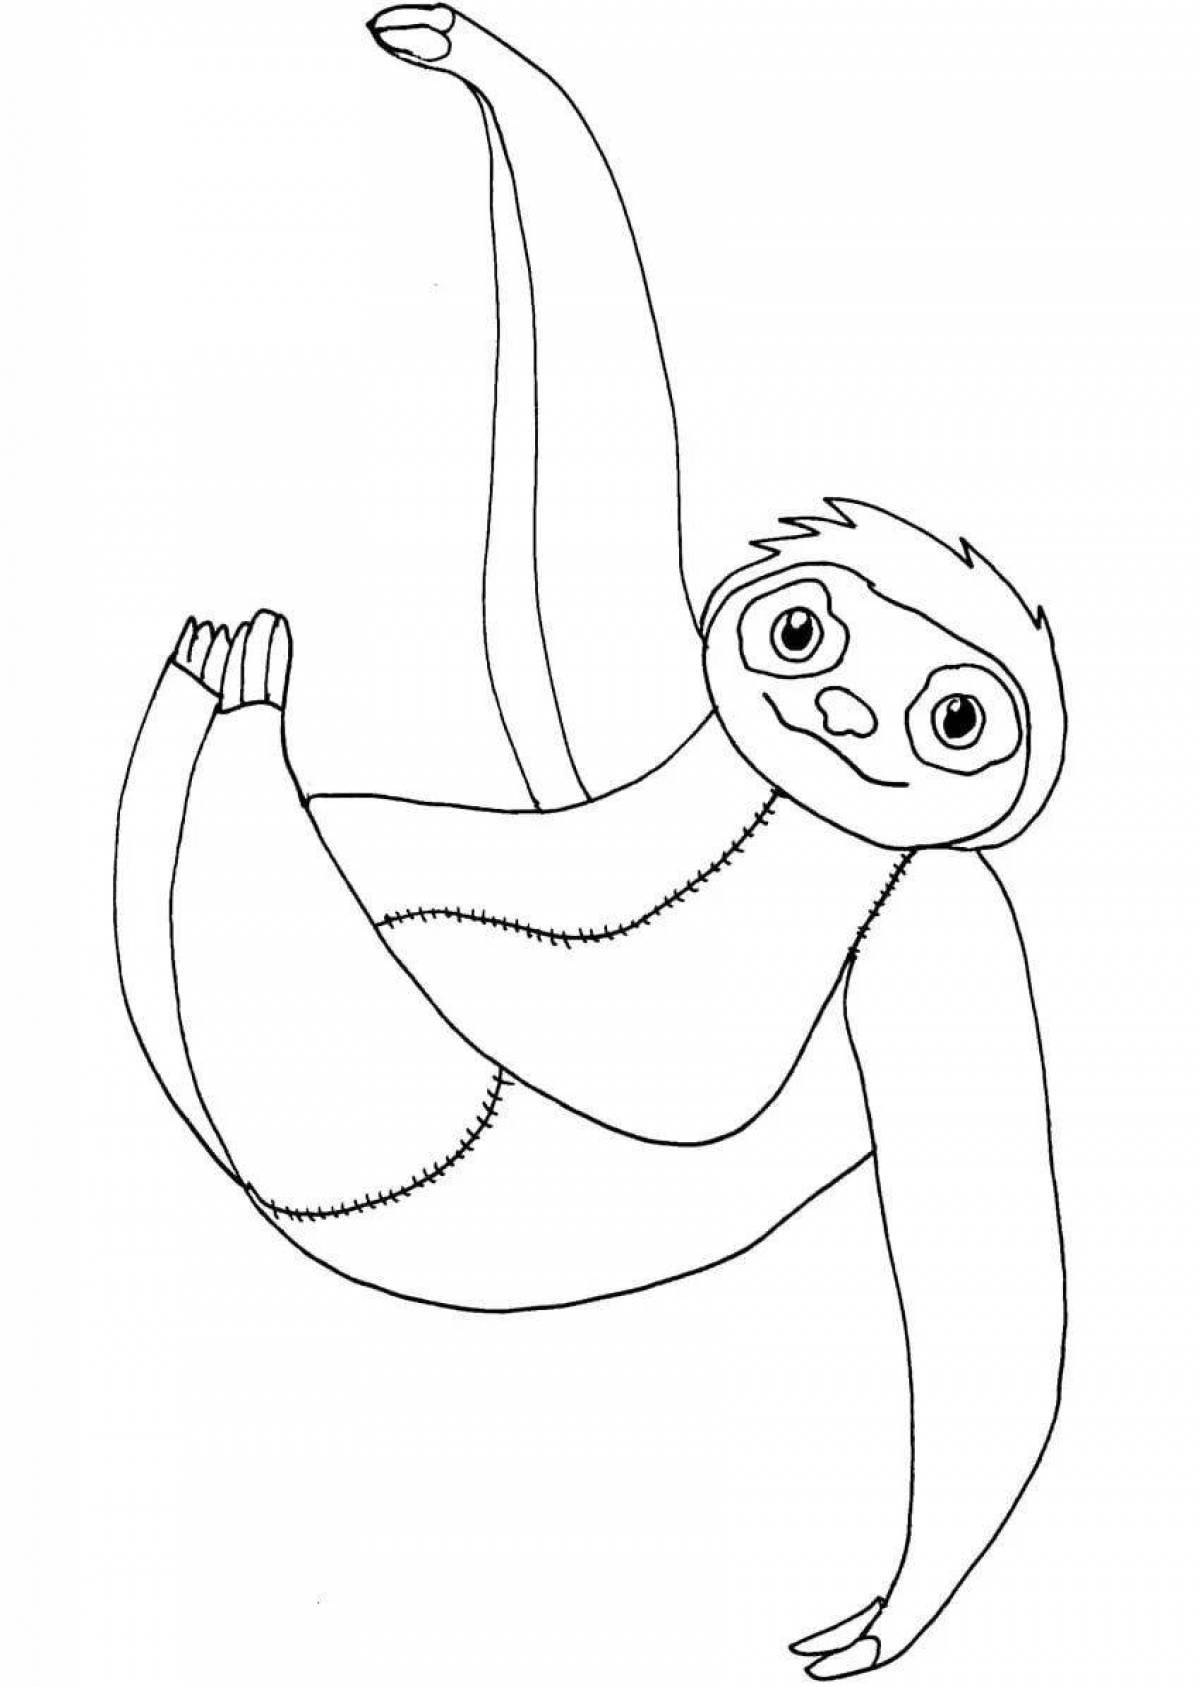 Fantastic sloth coloring for kids